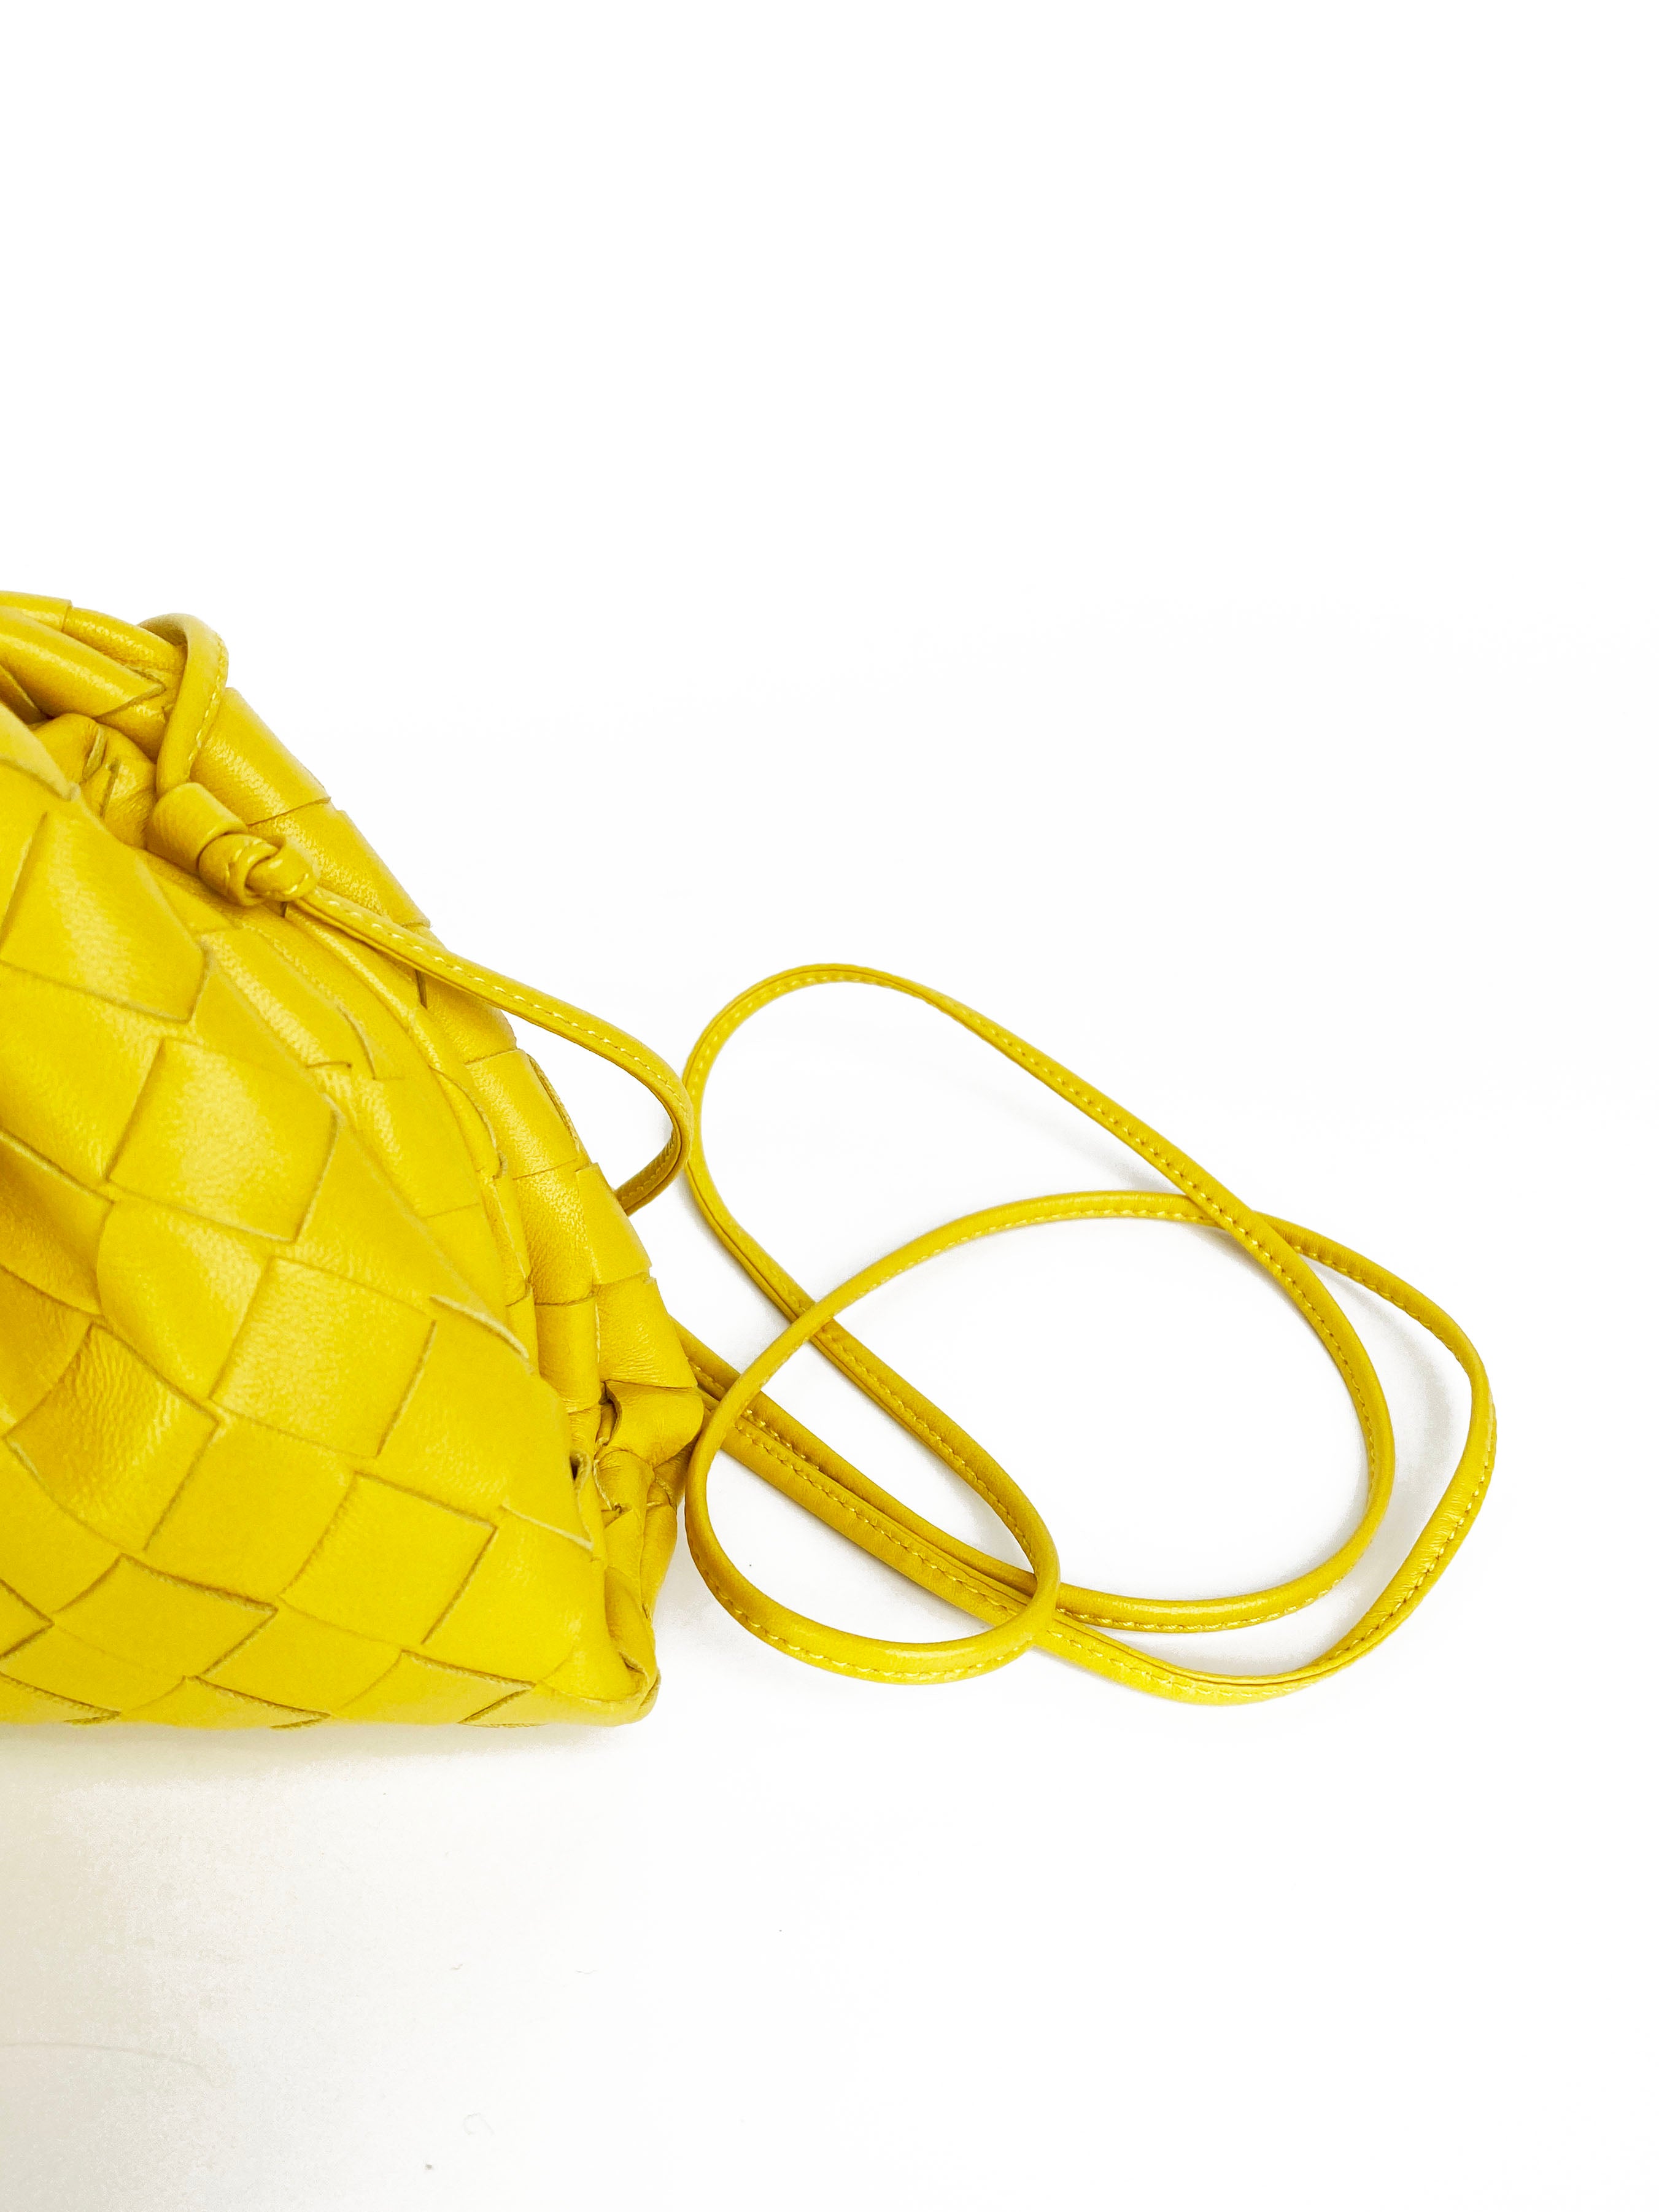 Bottega Veneta Mini Yellow The Pouch Bag